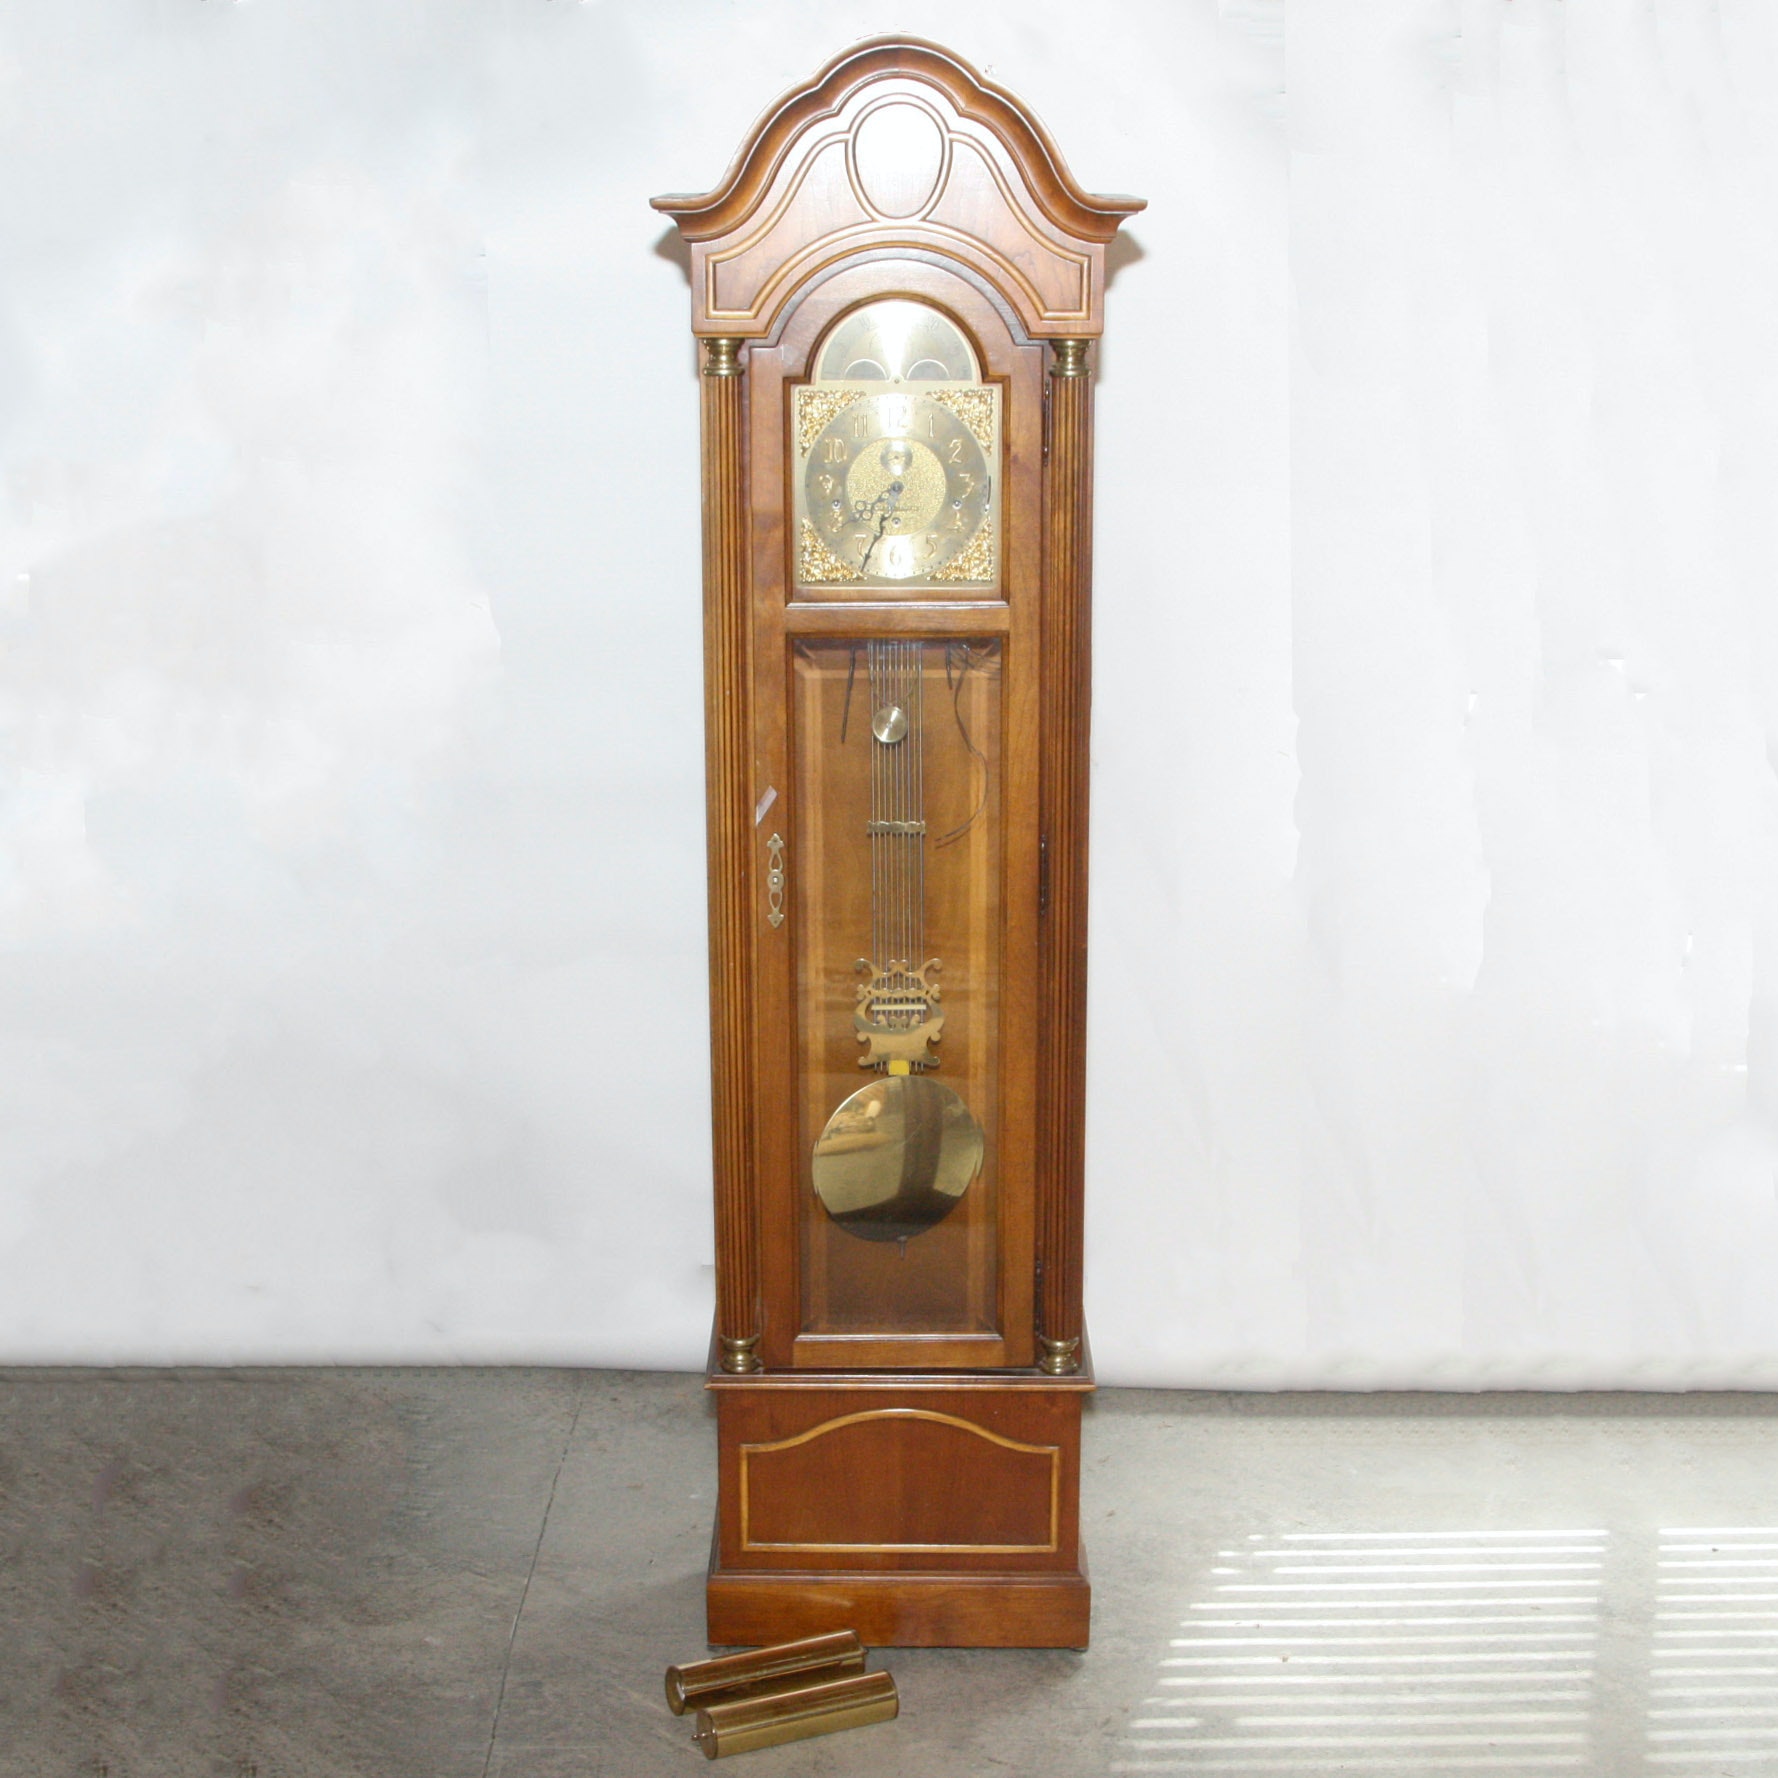 howard miller grandfather clock serial number lookup